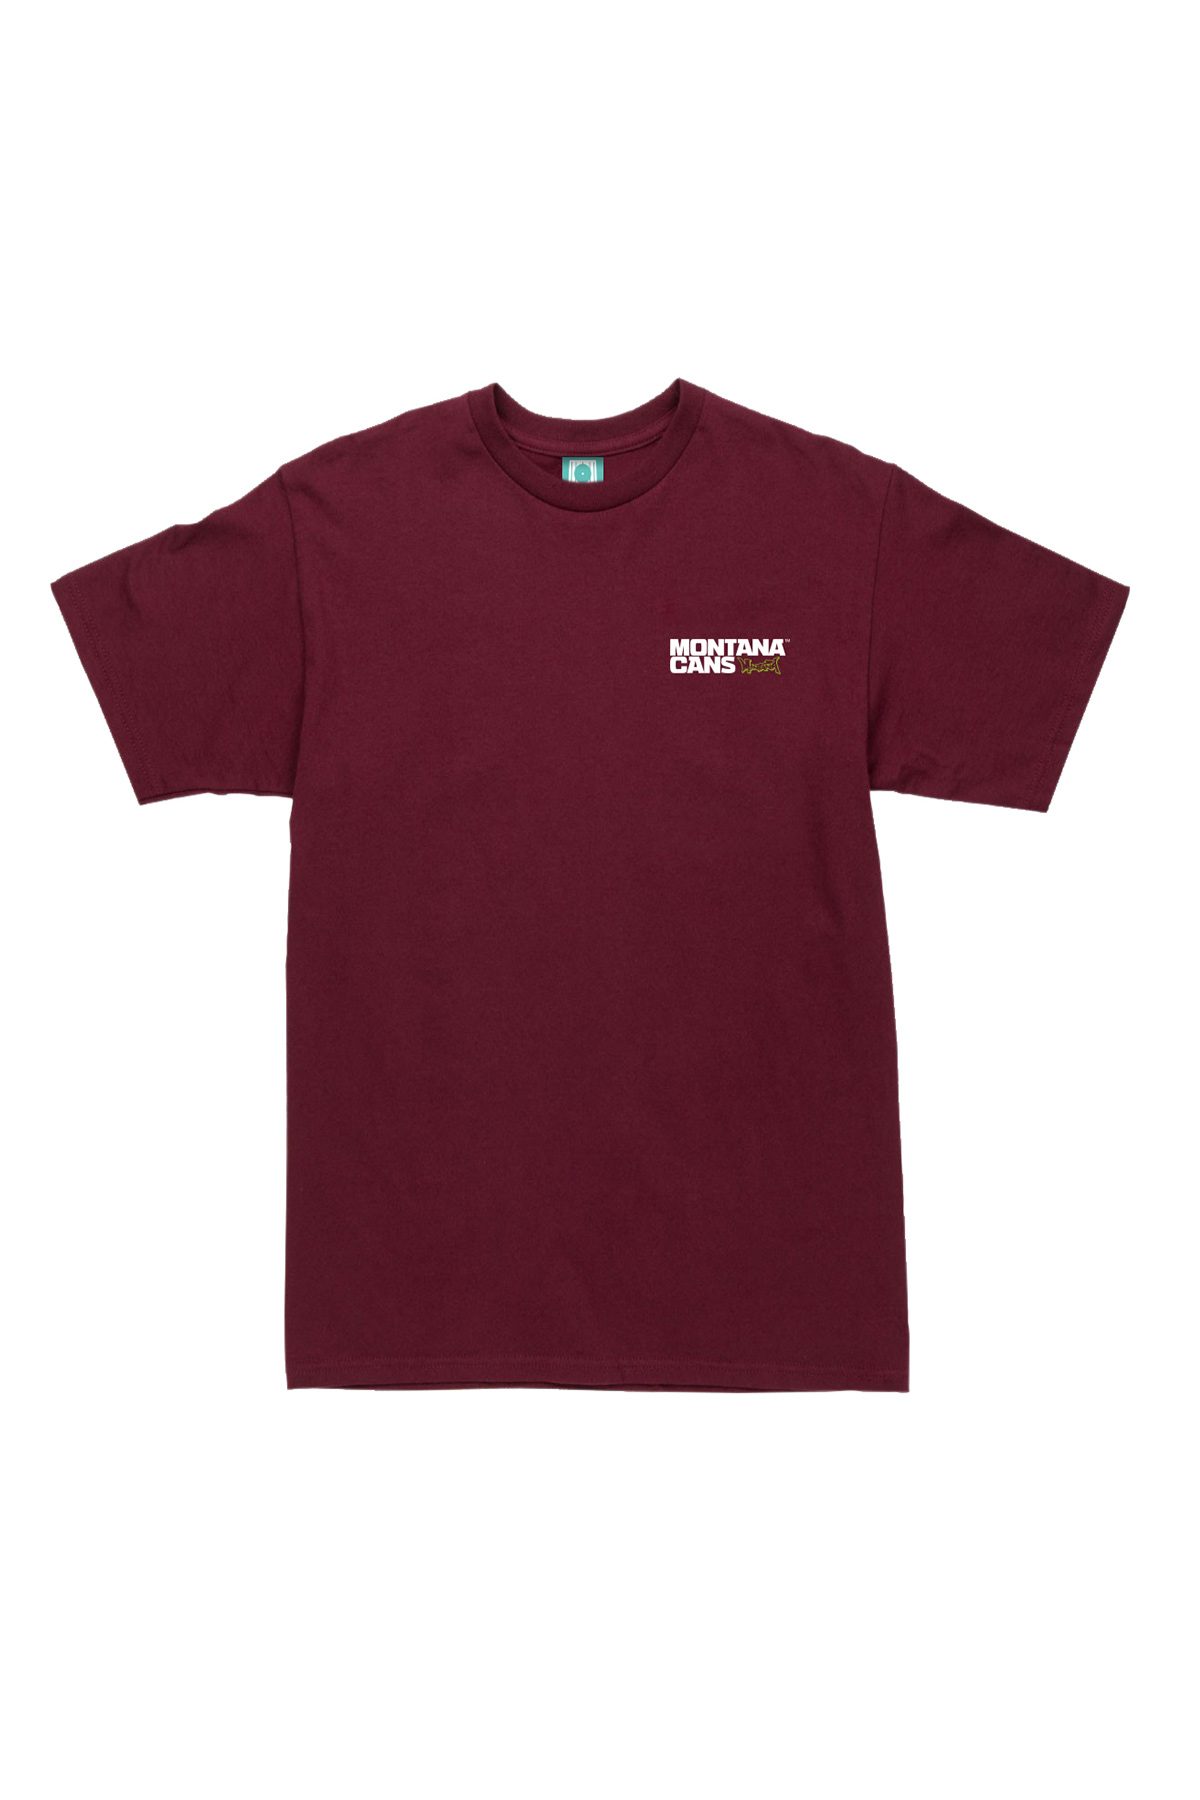 Montana TYPO+LOGO SMALL Burgundy T-Shirt